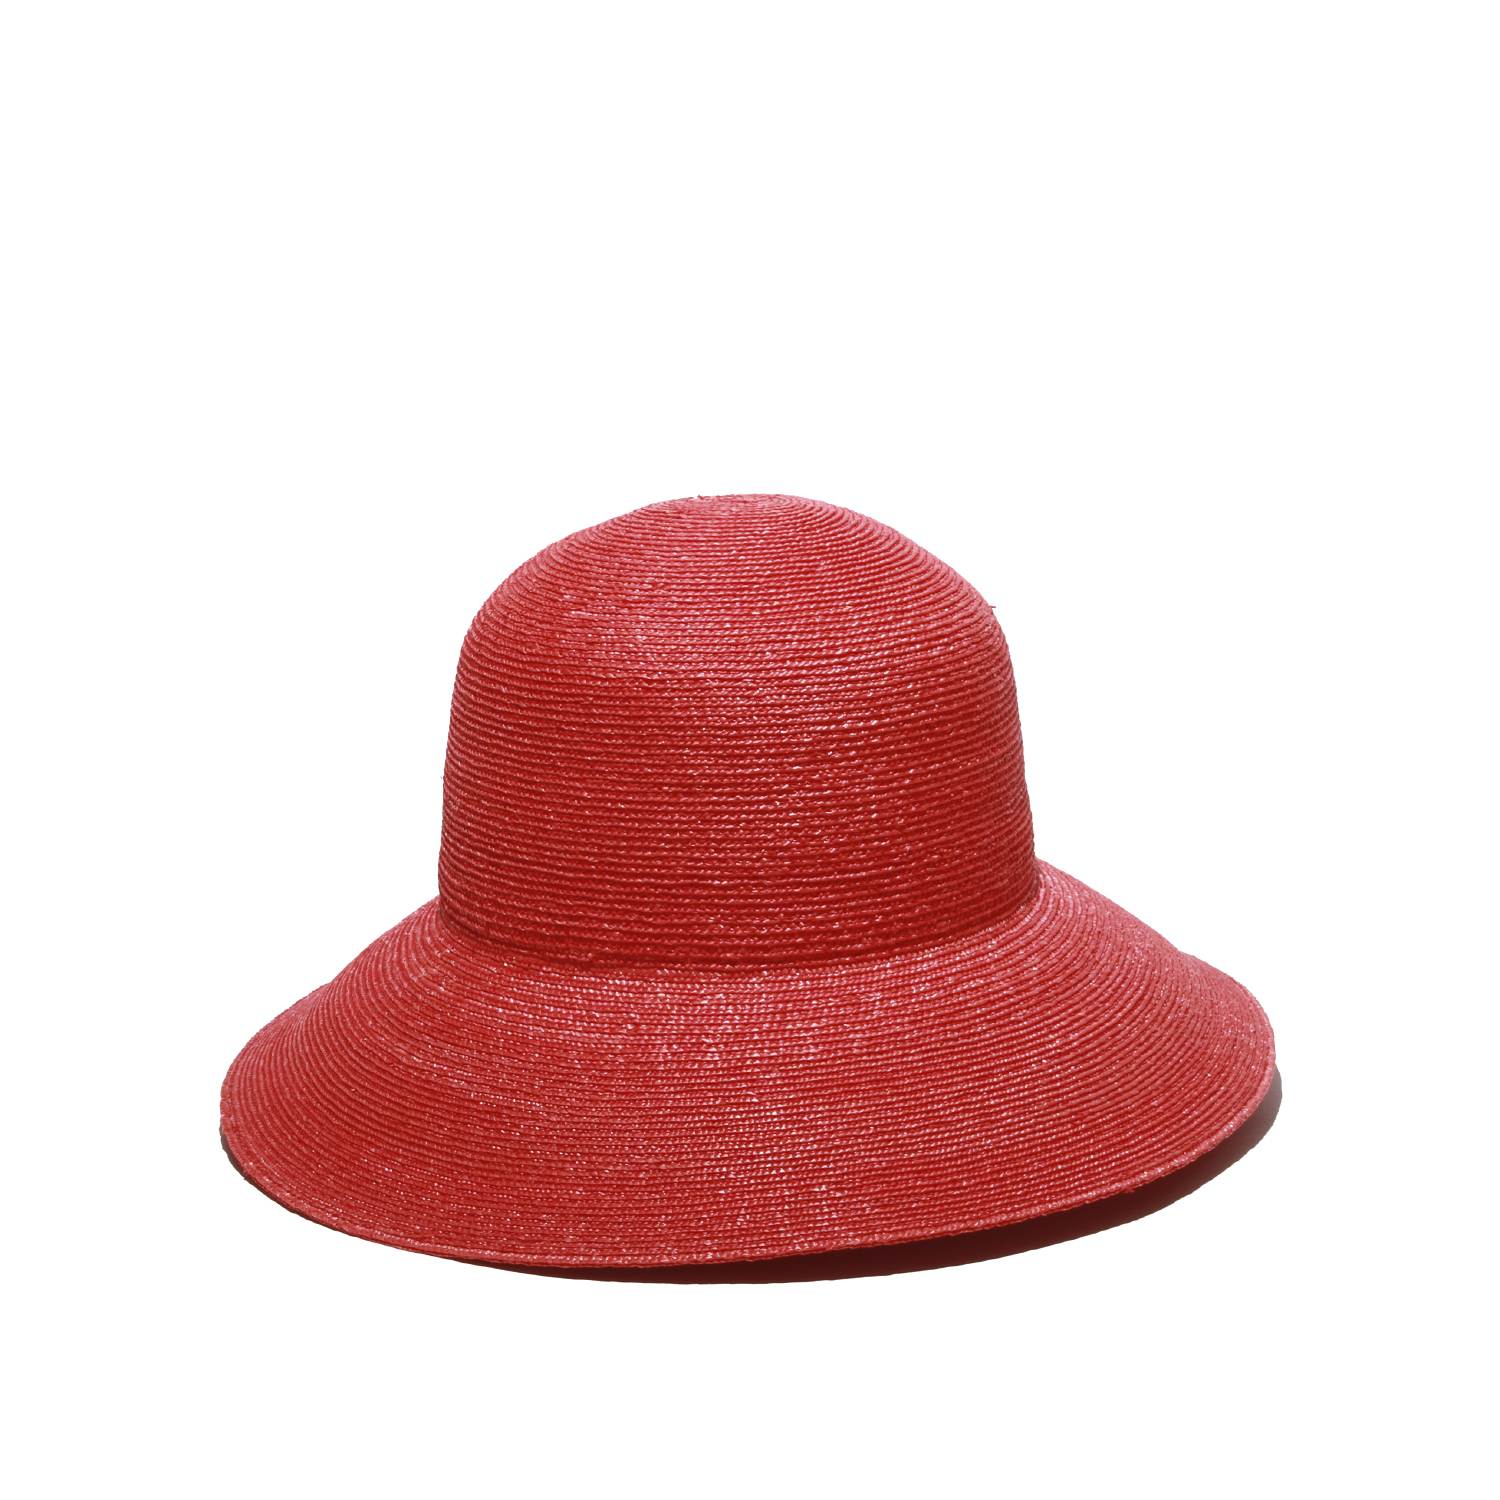 Chloe Red cloche straw hat